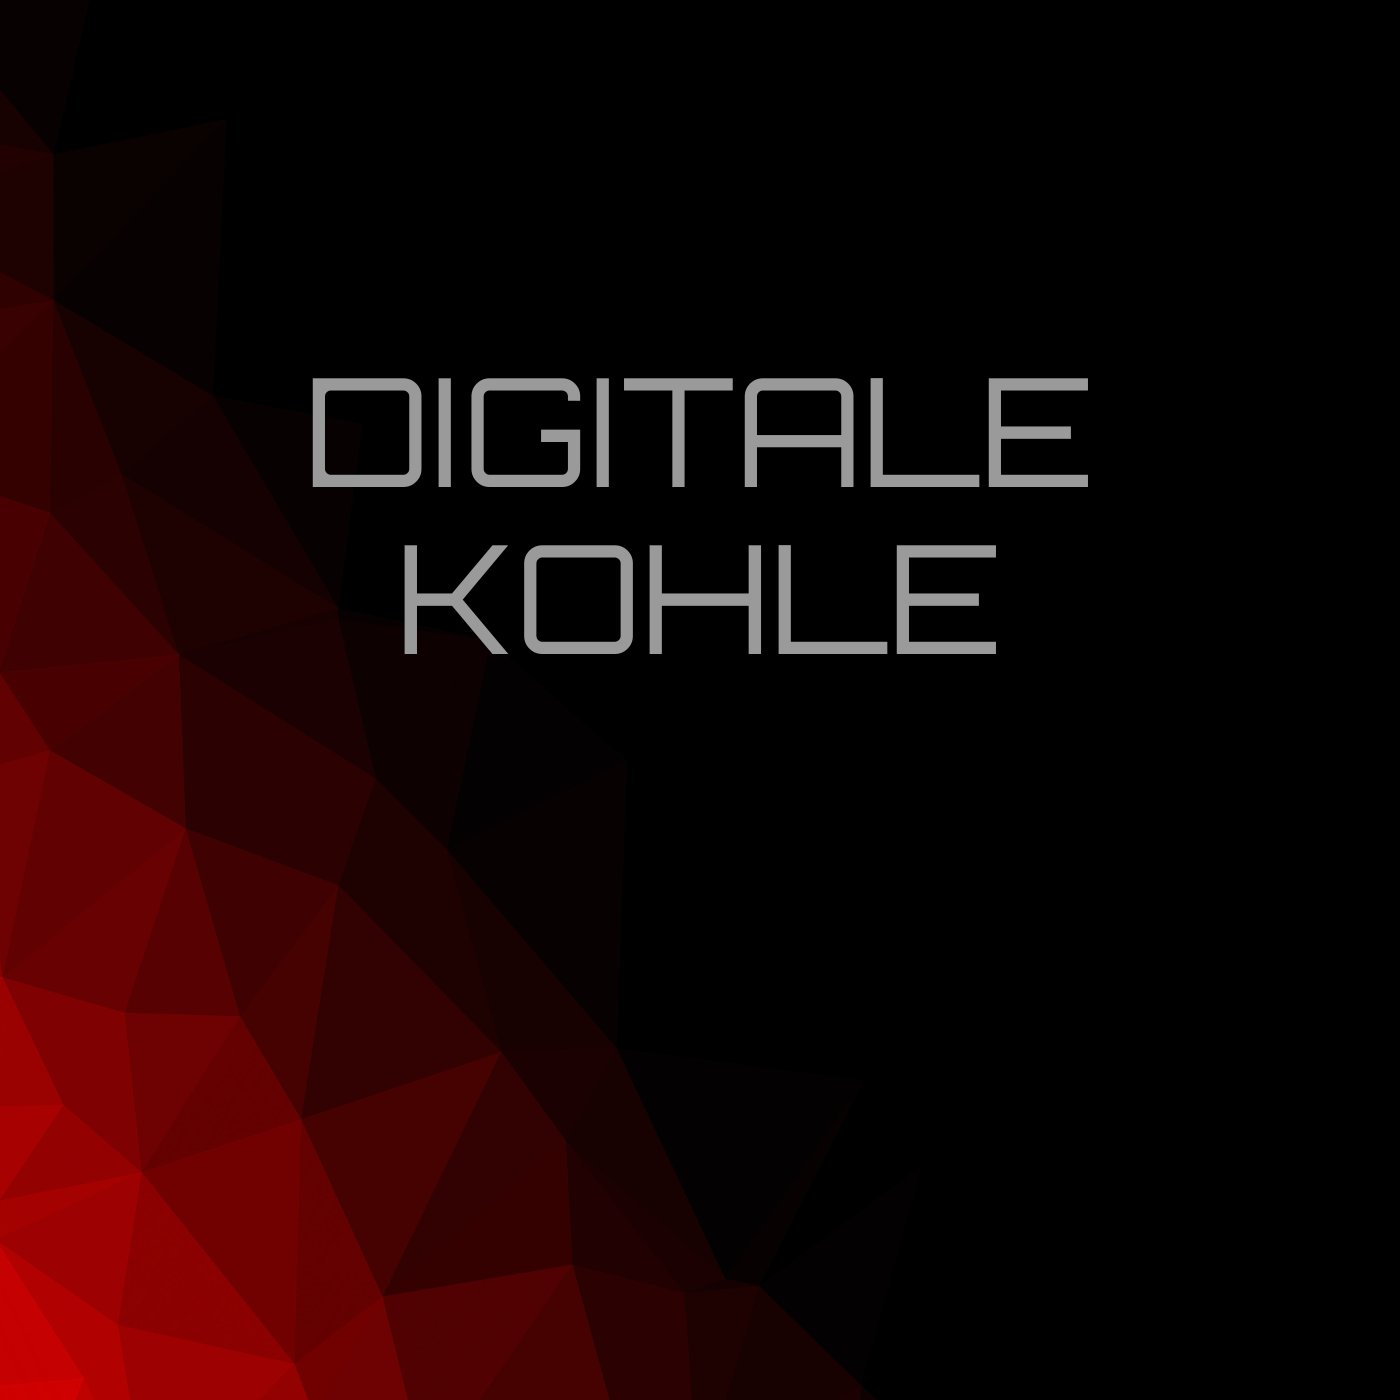 (c) Digitalekohle.de